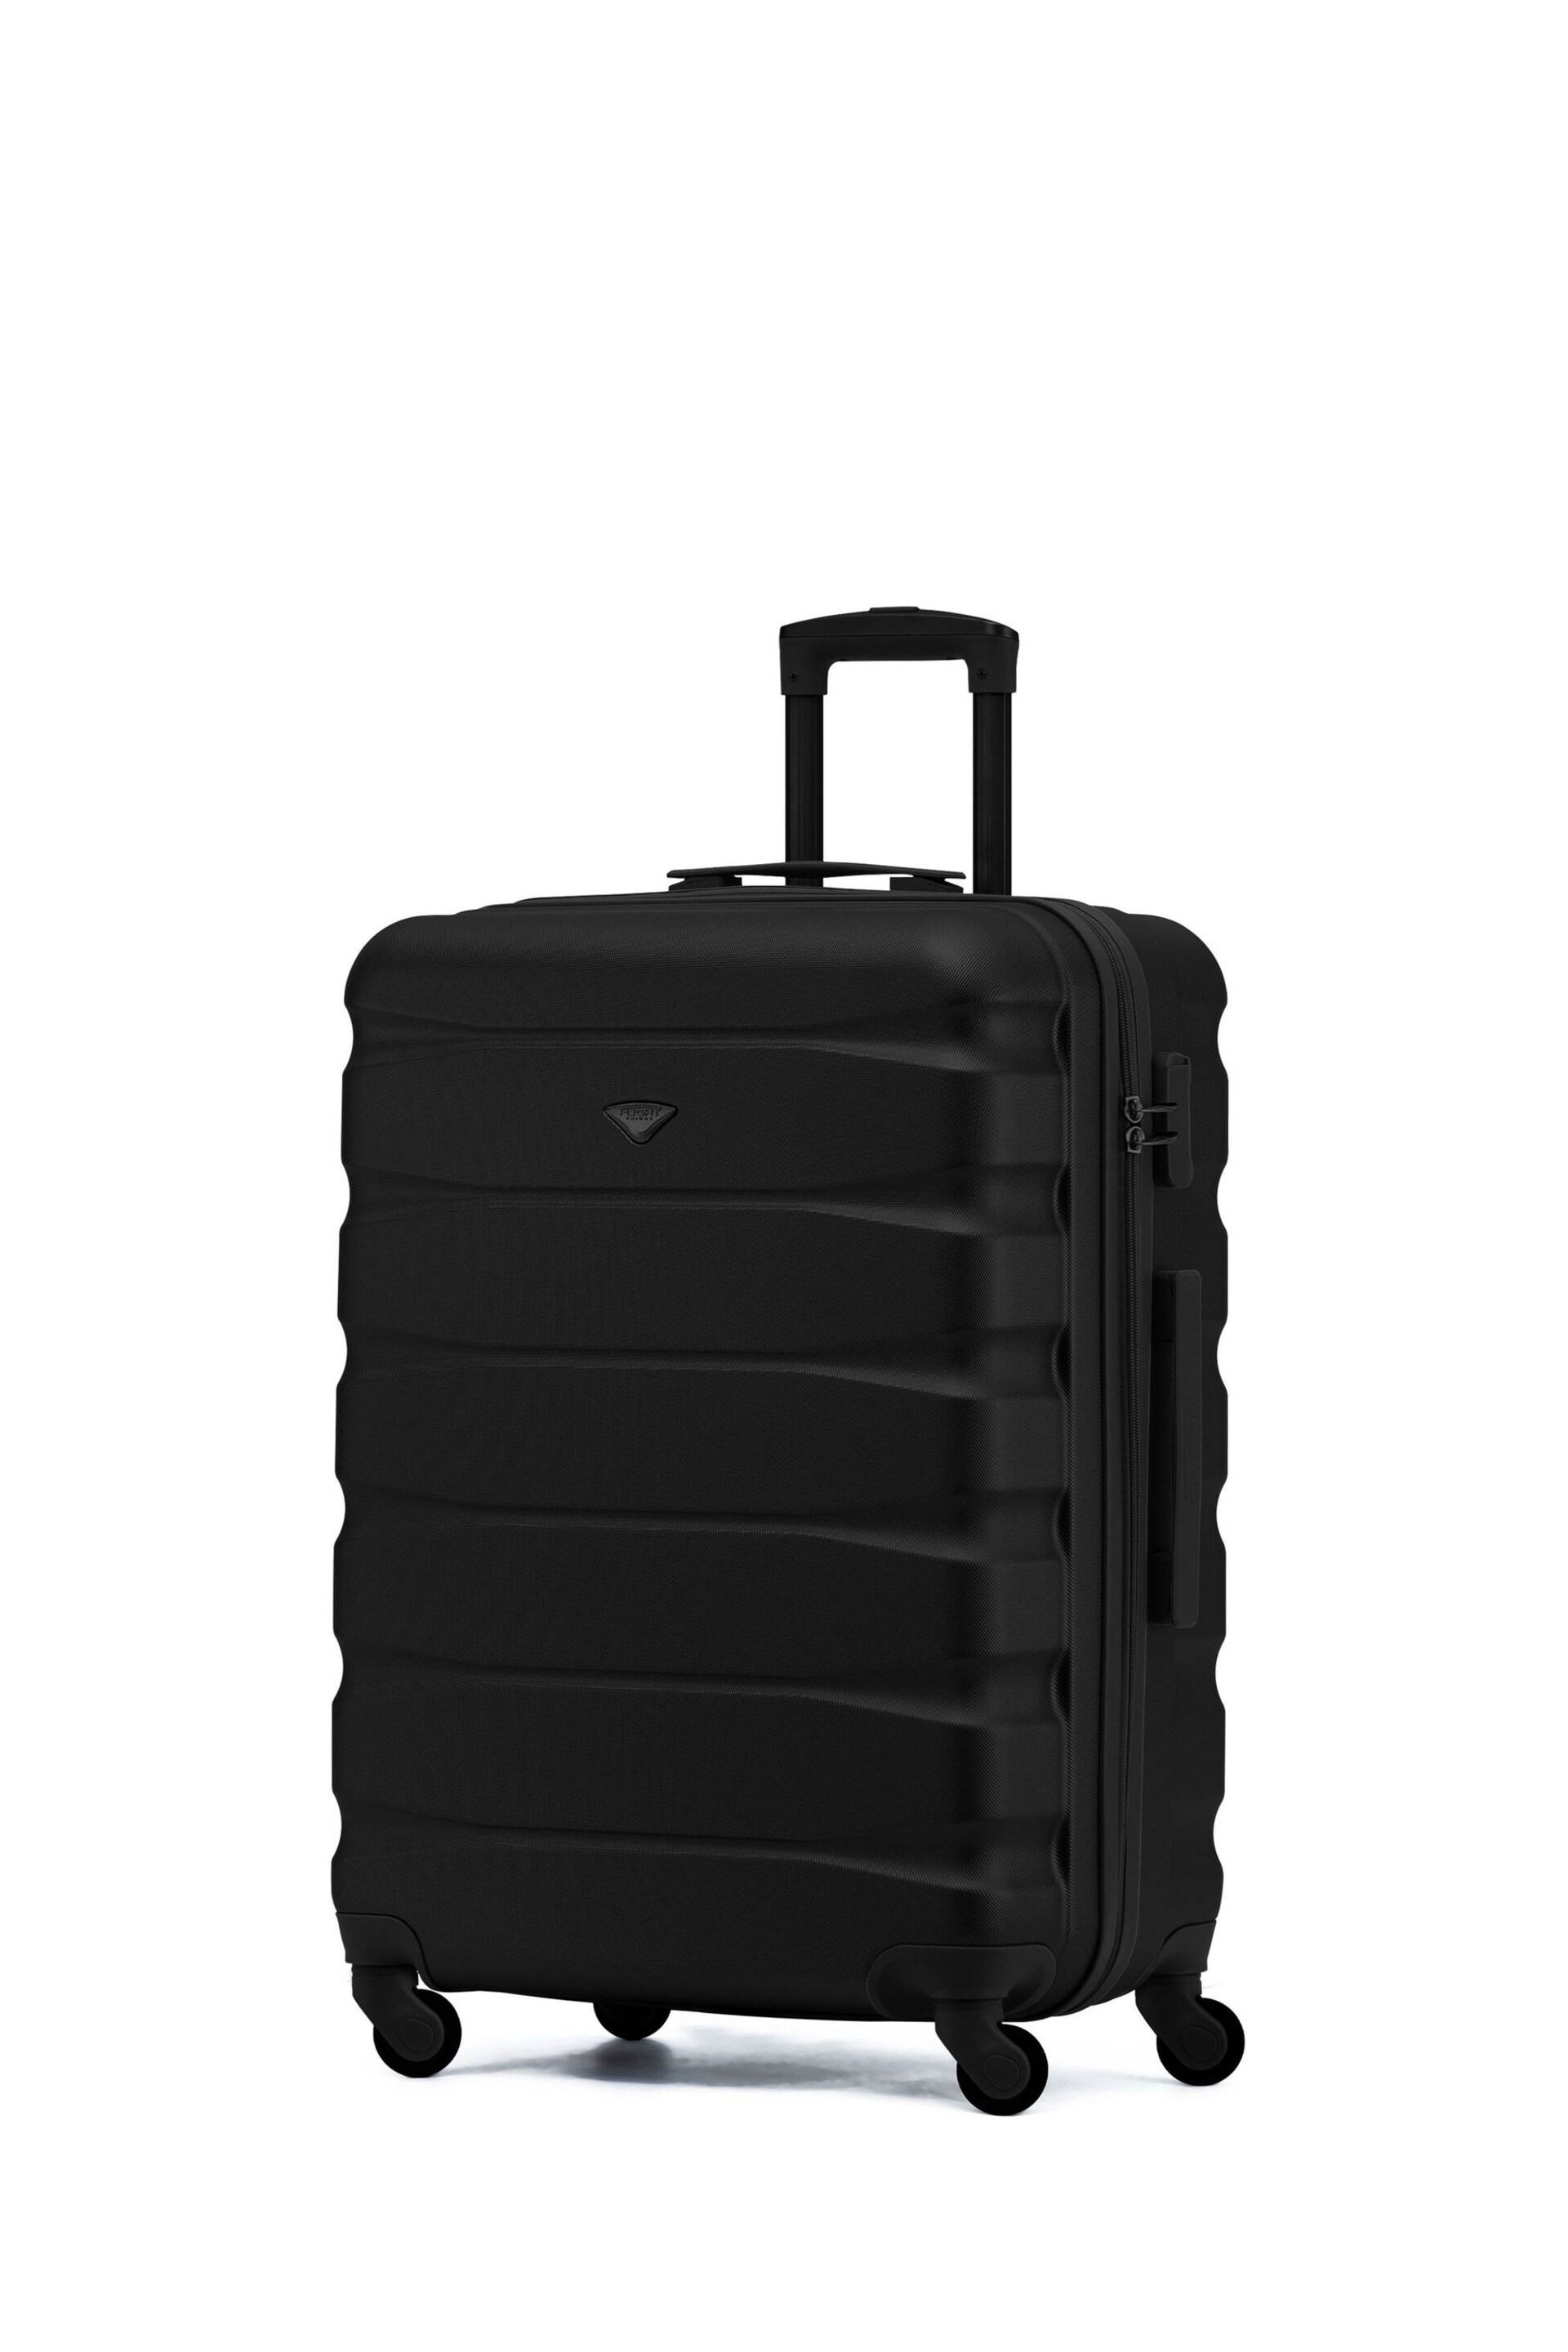 Flight Knight Black Mono Medium Hardcase Lightweight Check In Suitcase With 4 Wheels - Image 1 of 7